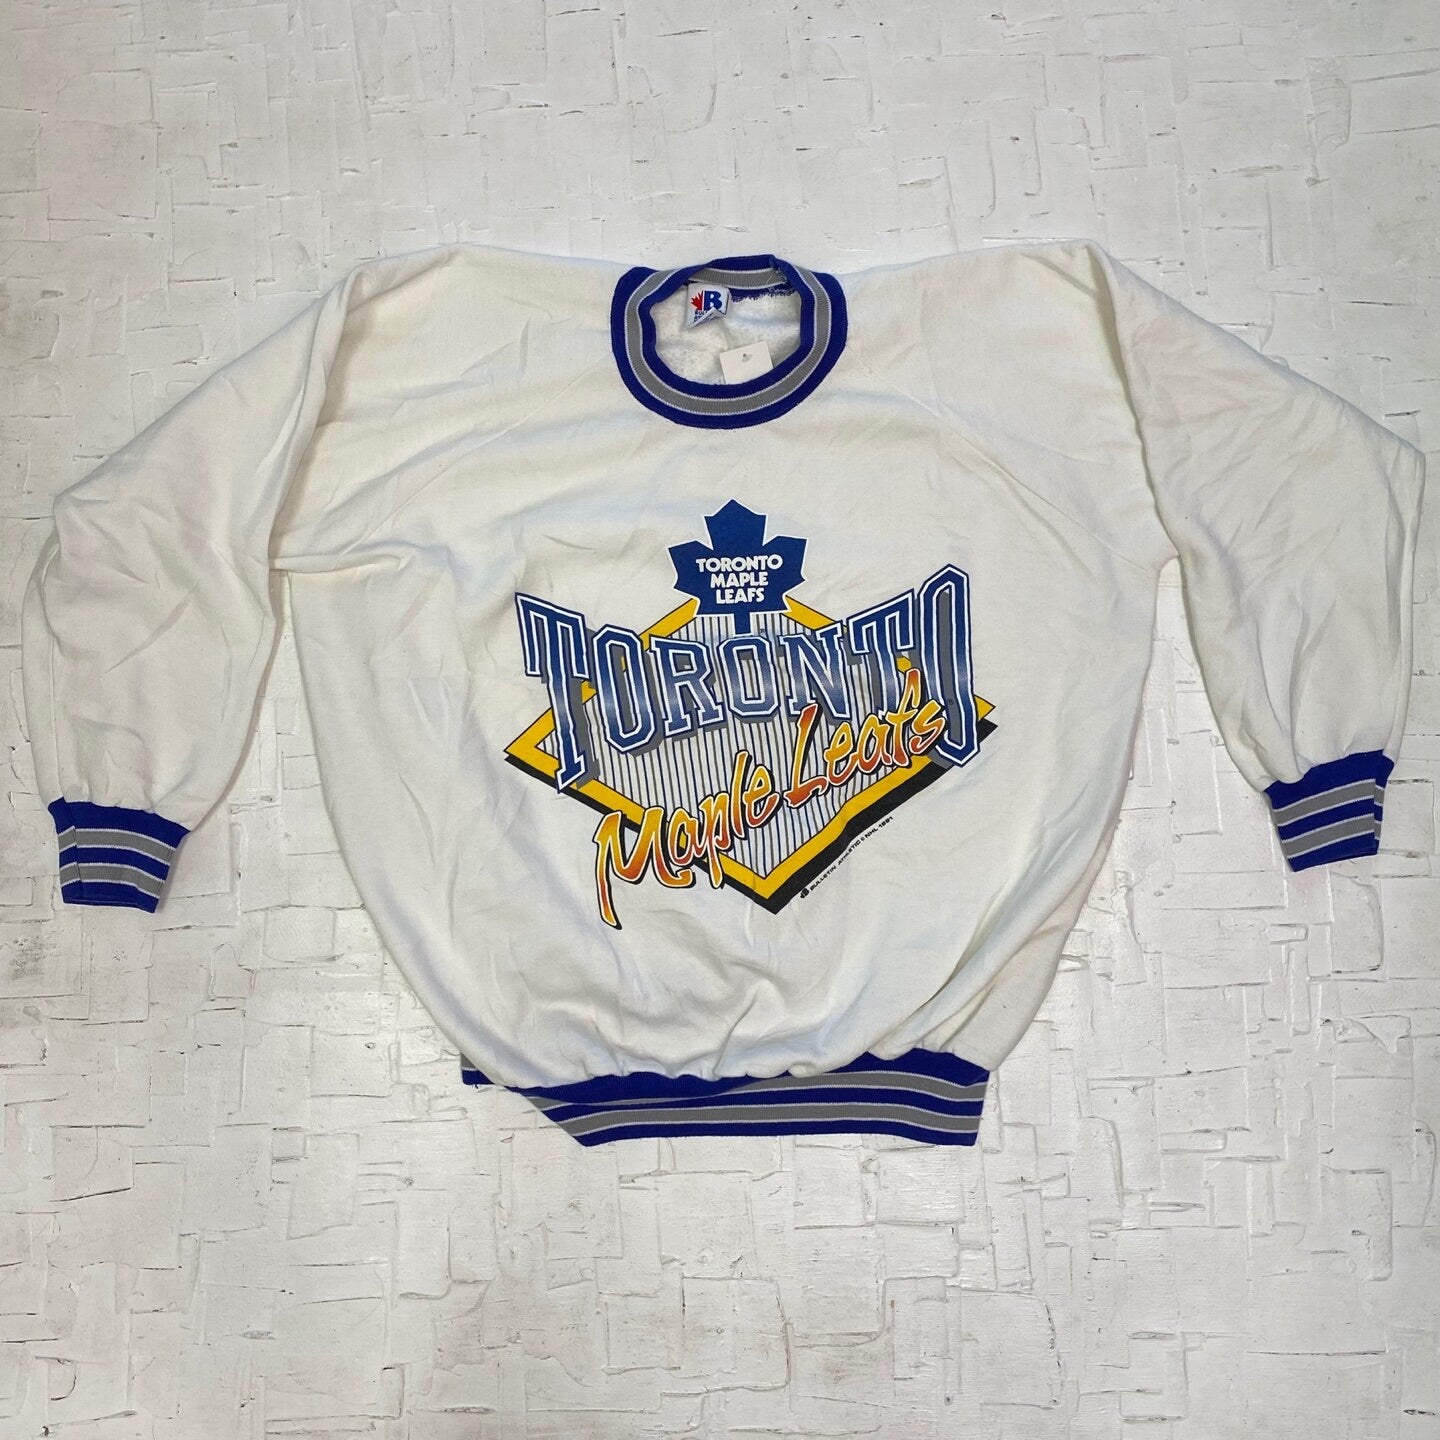 1991 Vintage Toronto Maple Leafs Oversized Graphic Sweatshirt with Striped Collar | Vintage Graphic Sweatshirt | Size XL | SKU M-2080 |